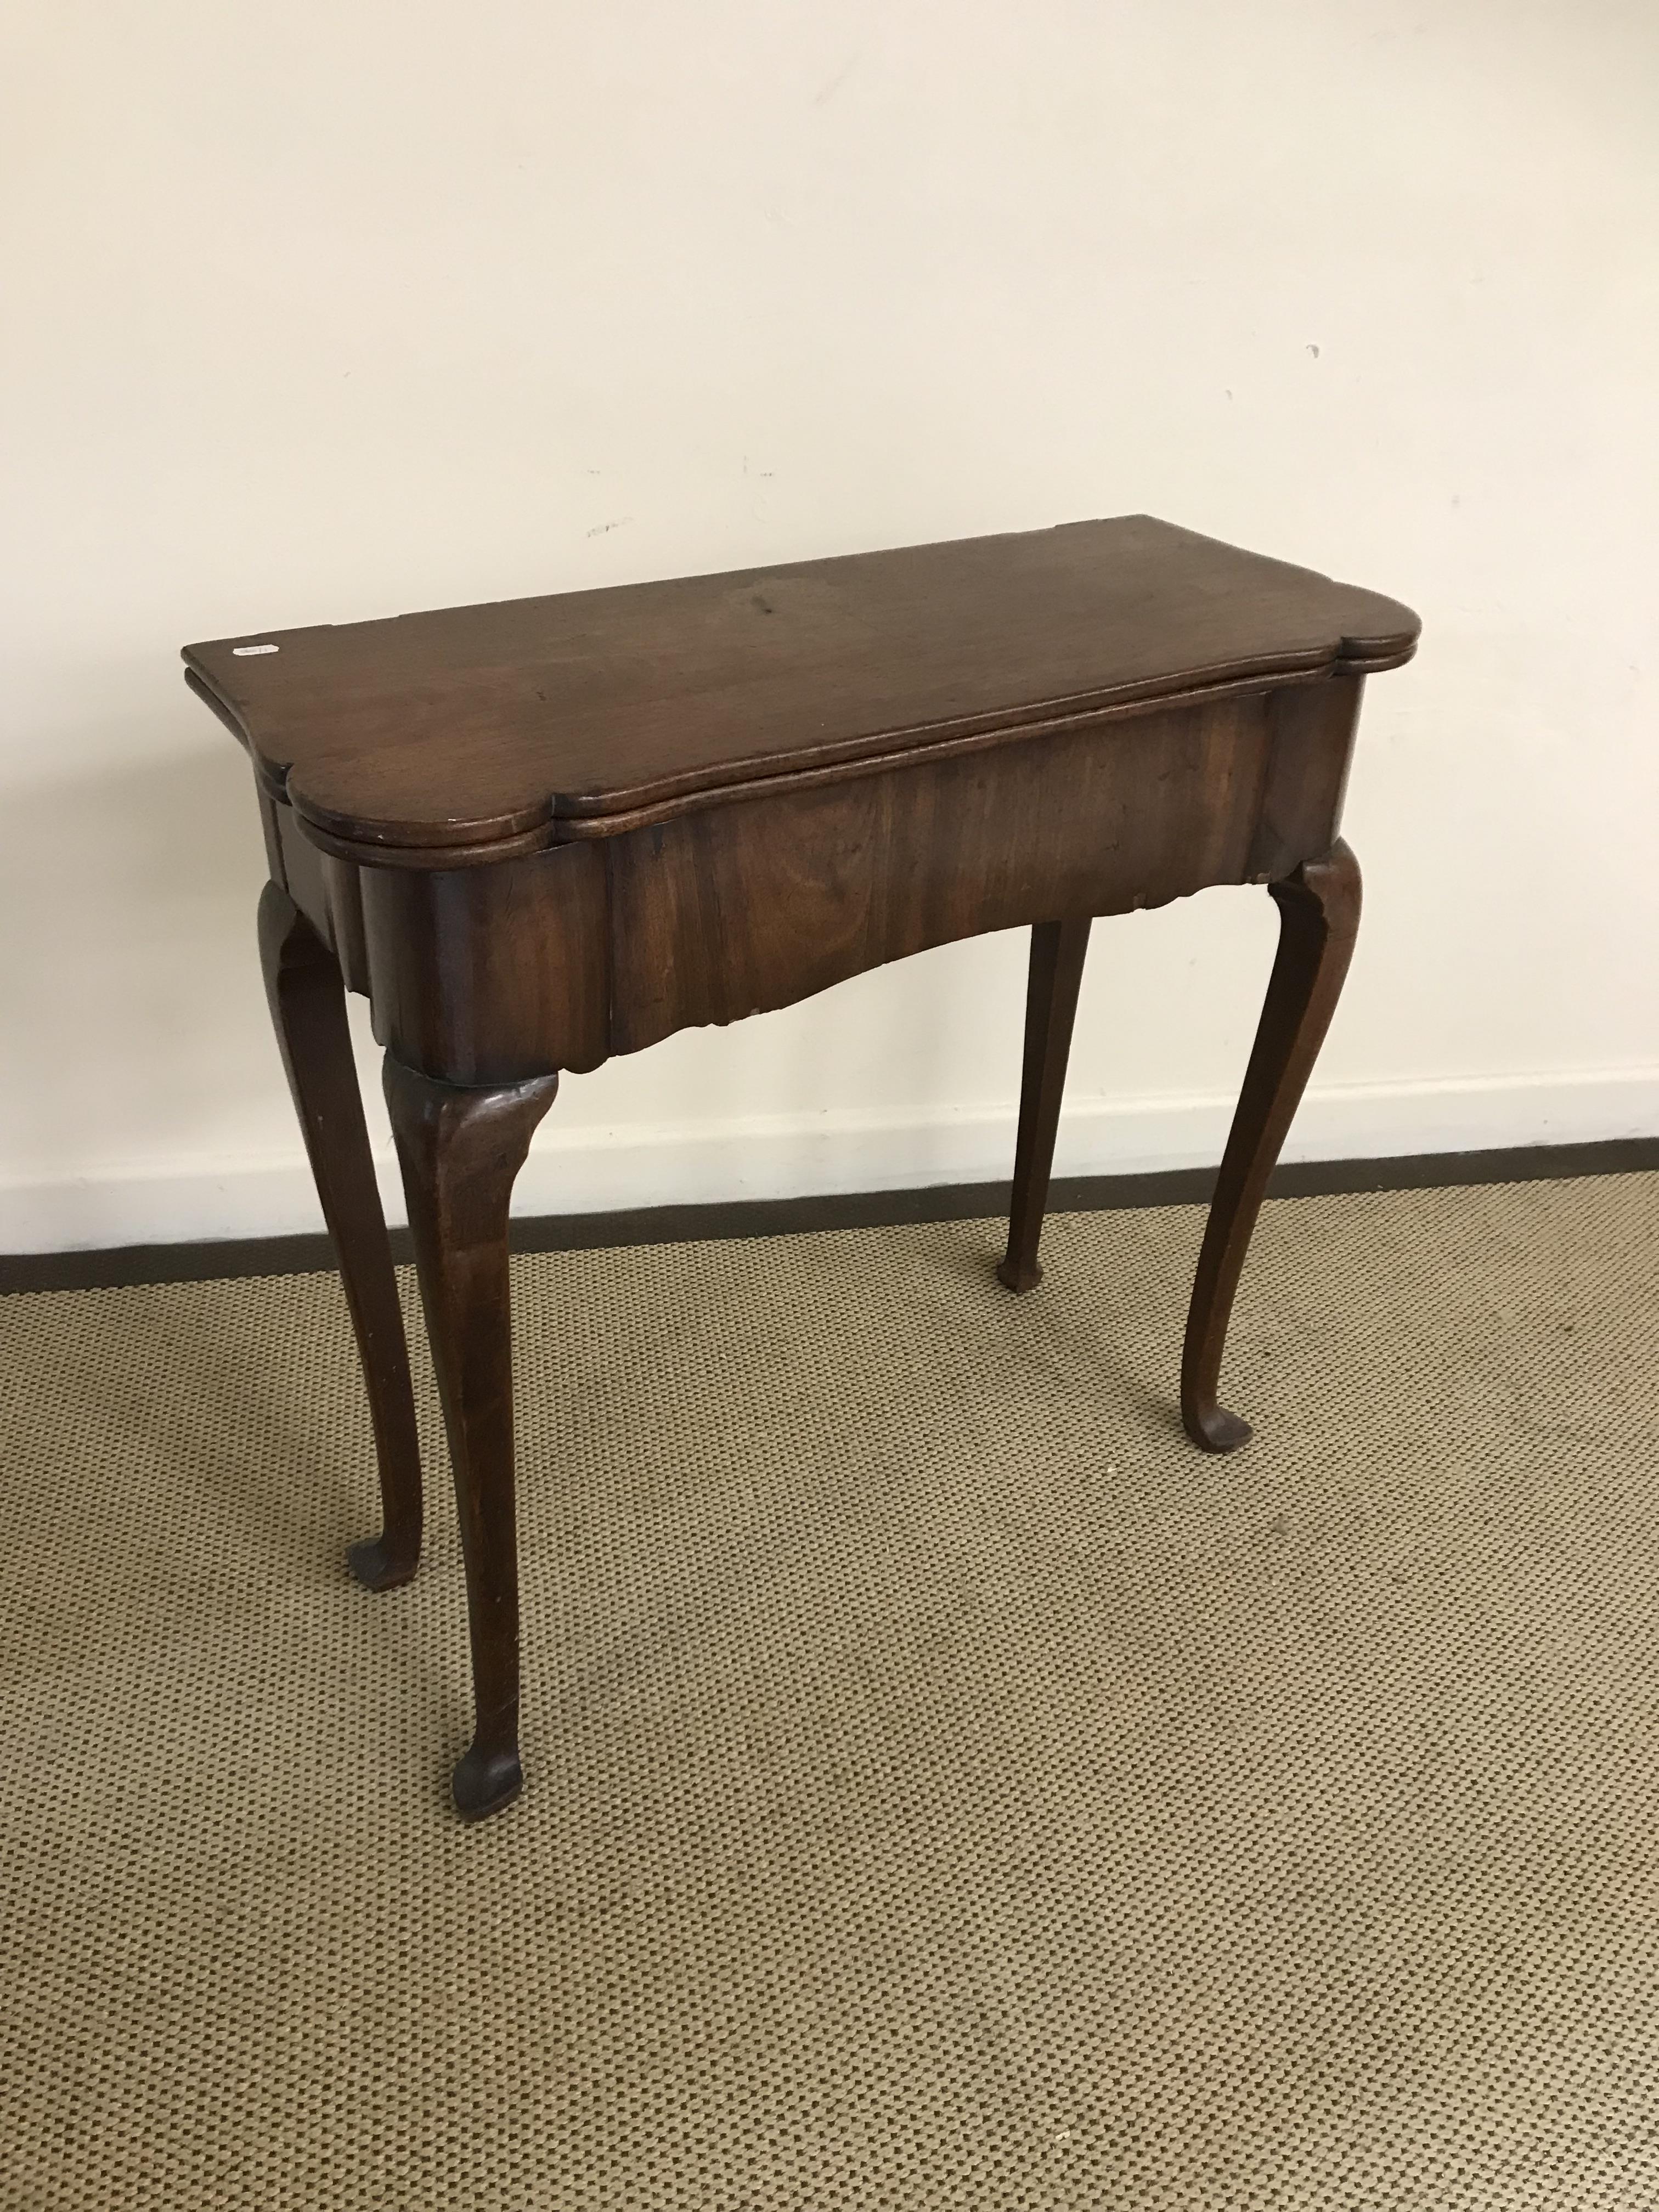 A 19th Century walnut tea table in the e